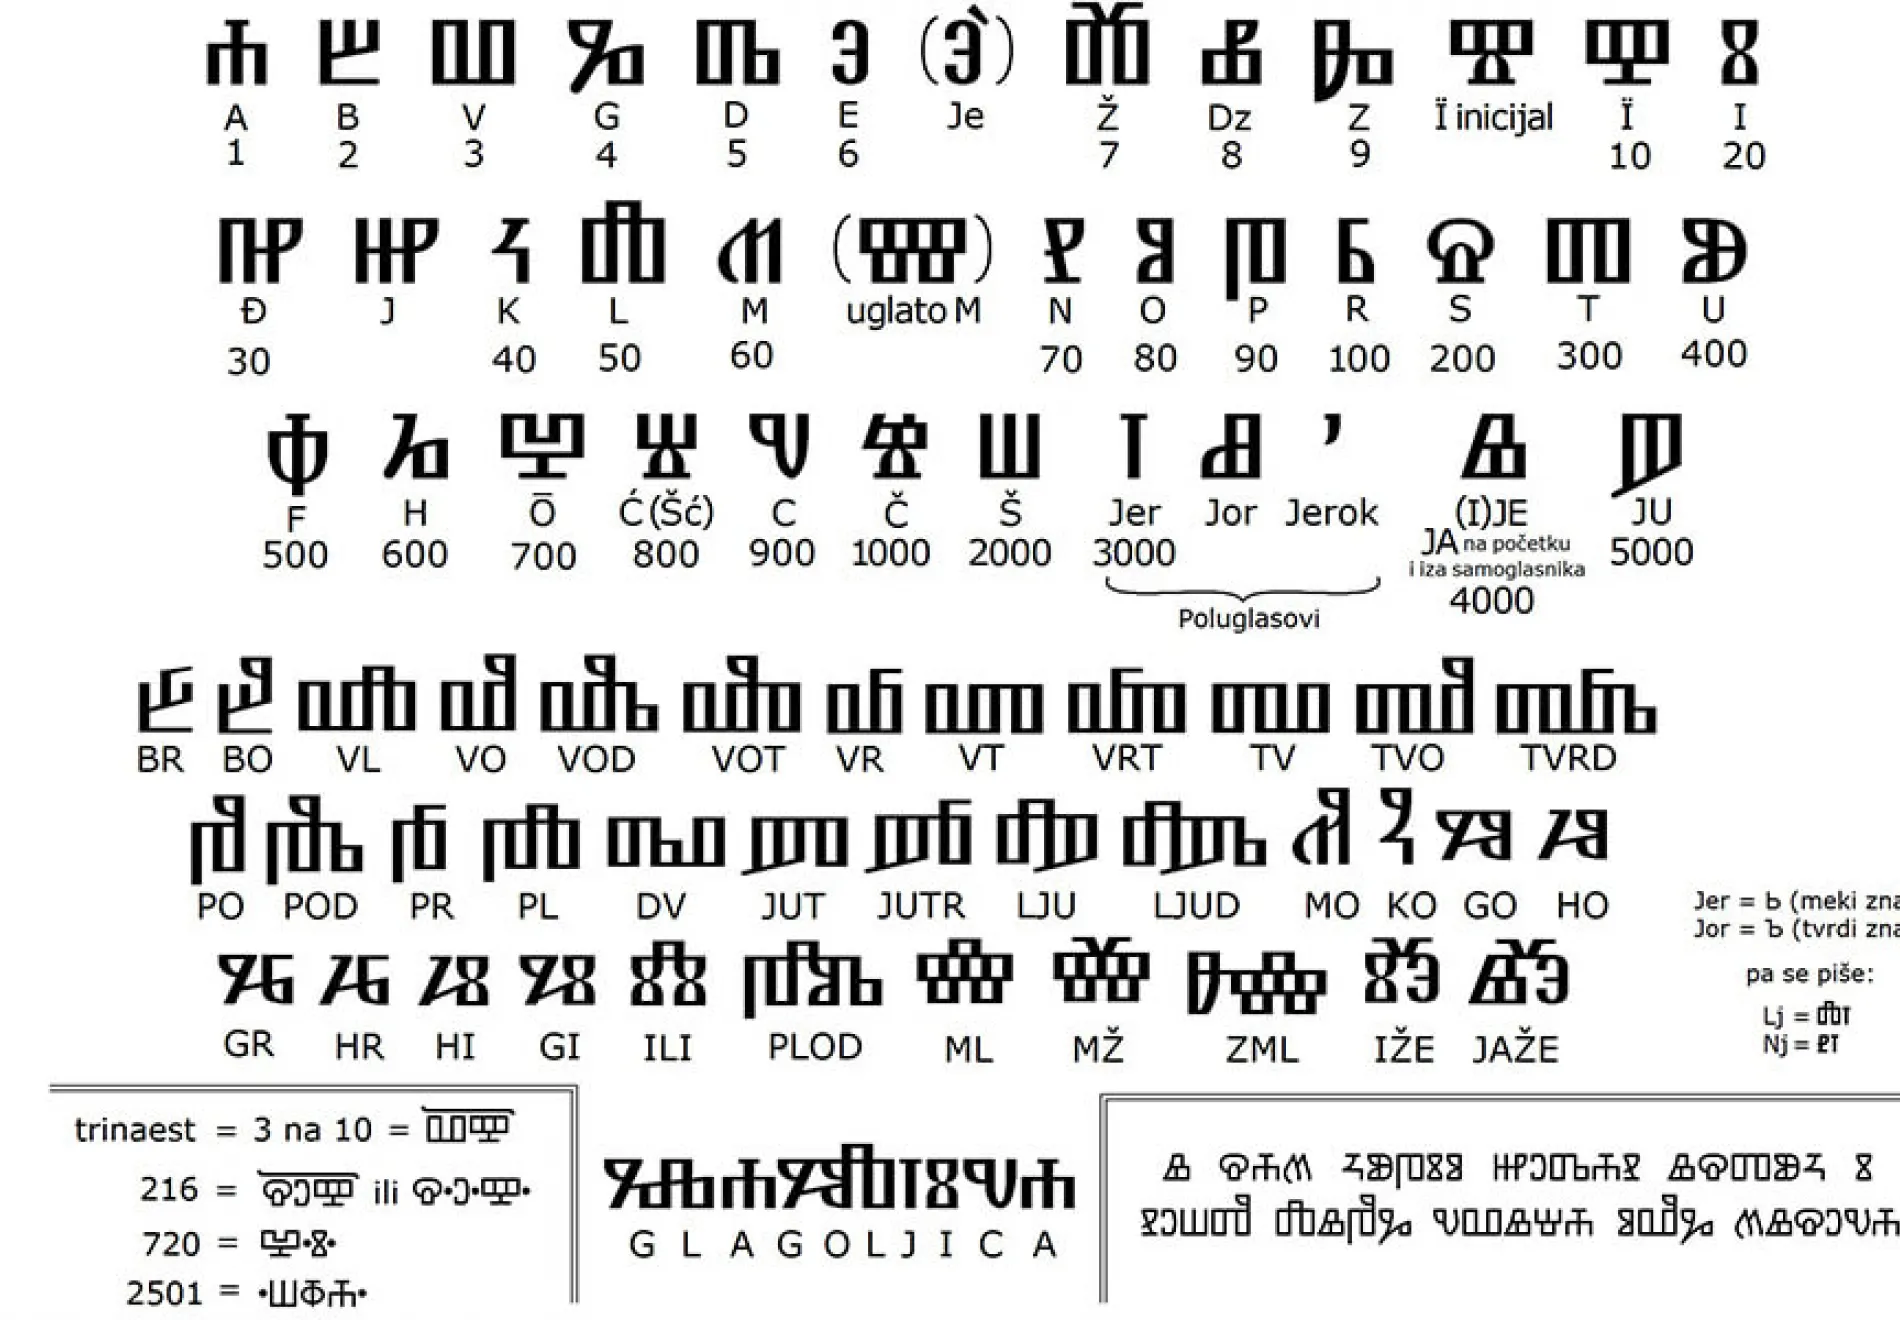 The-Glagolitic-alphabet